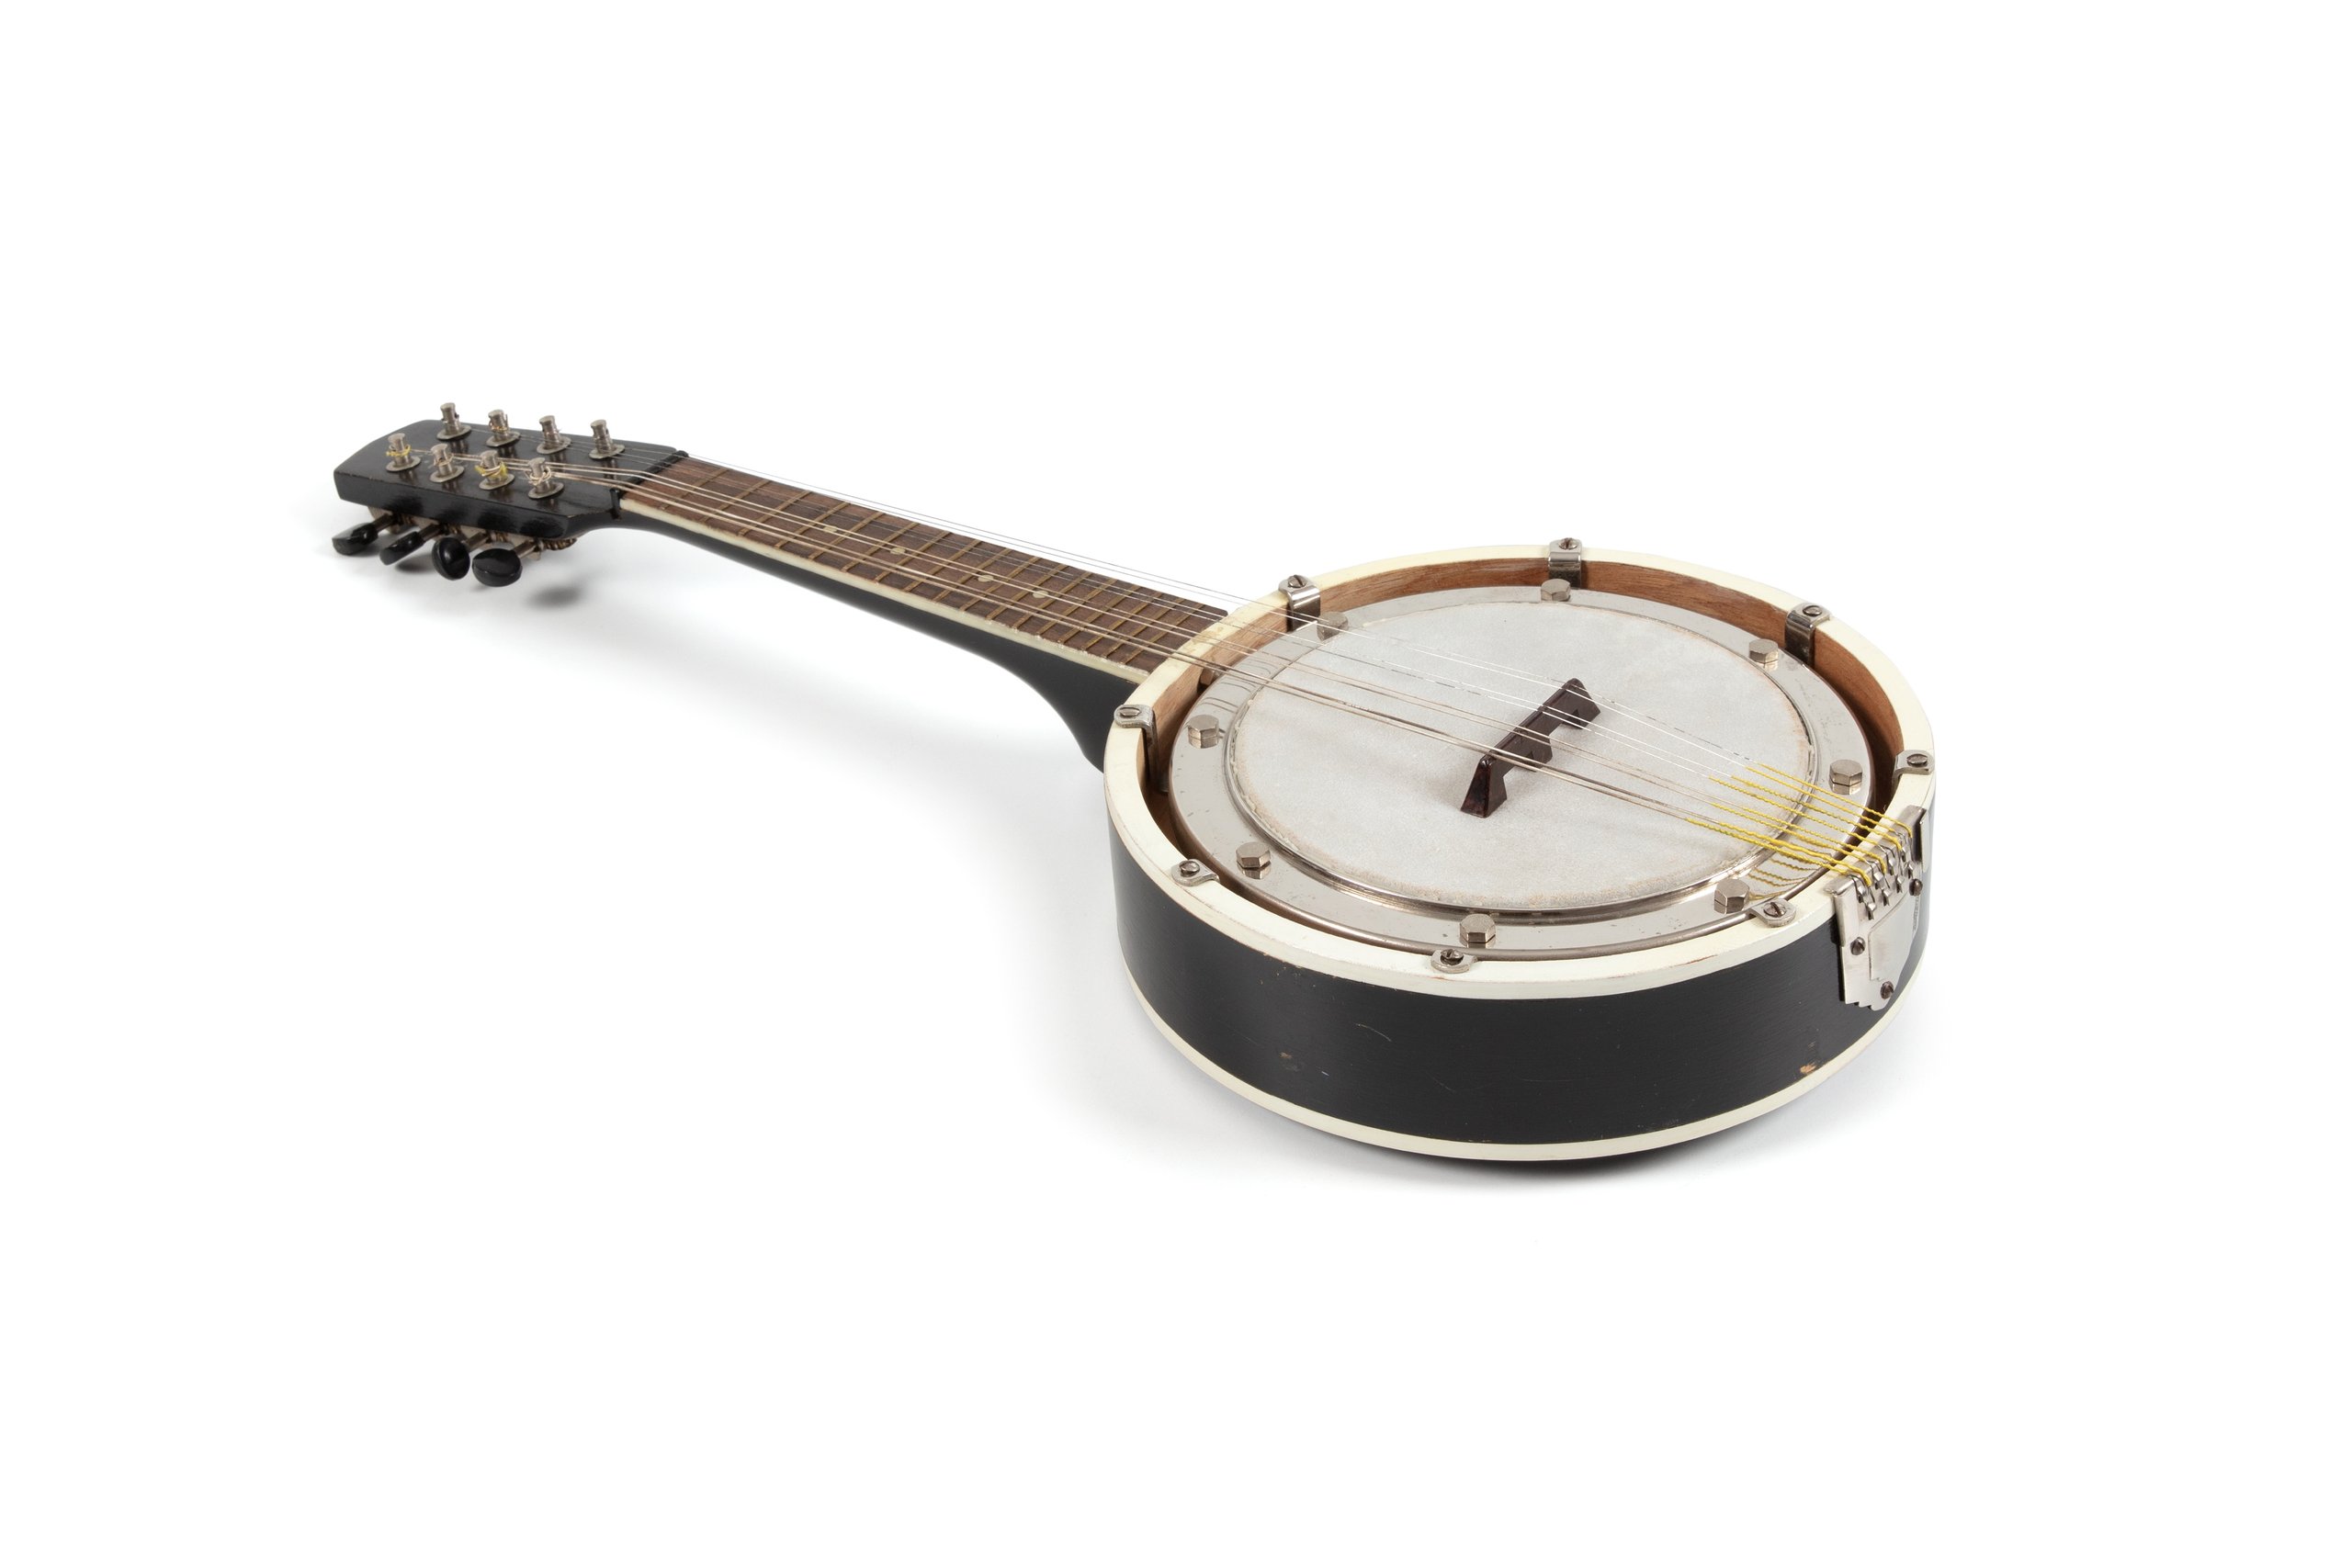 Banjo mandolin with case by Pacific